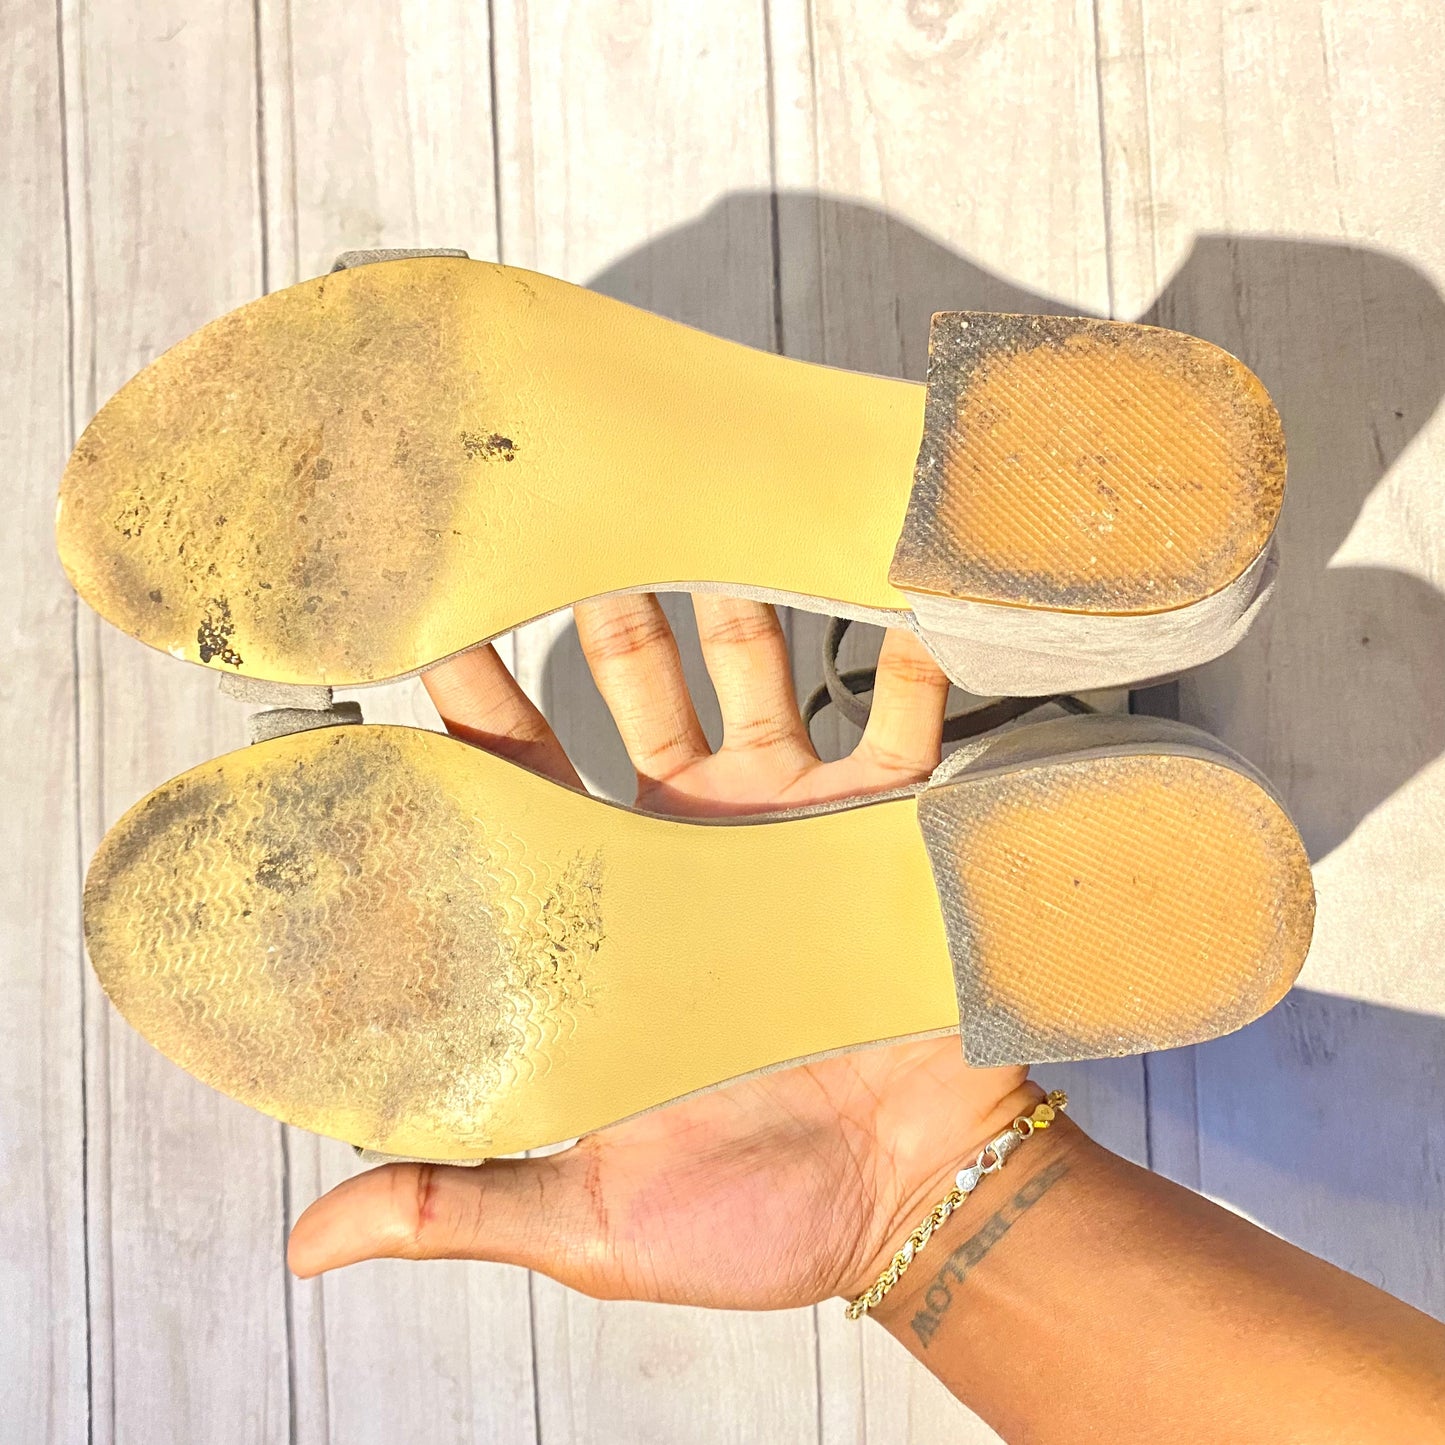 Sandals Heels Block By Steve Madden  Size: 8.5